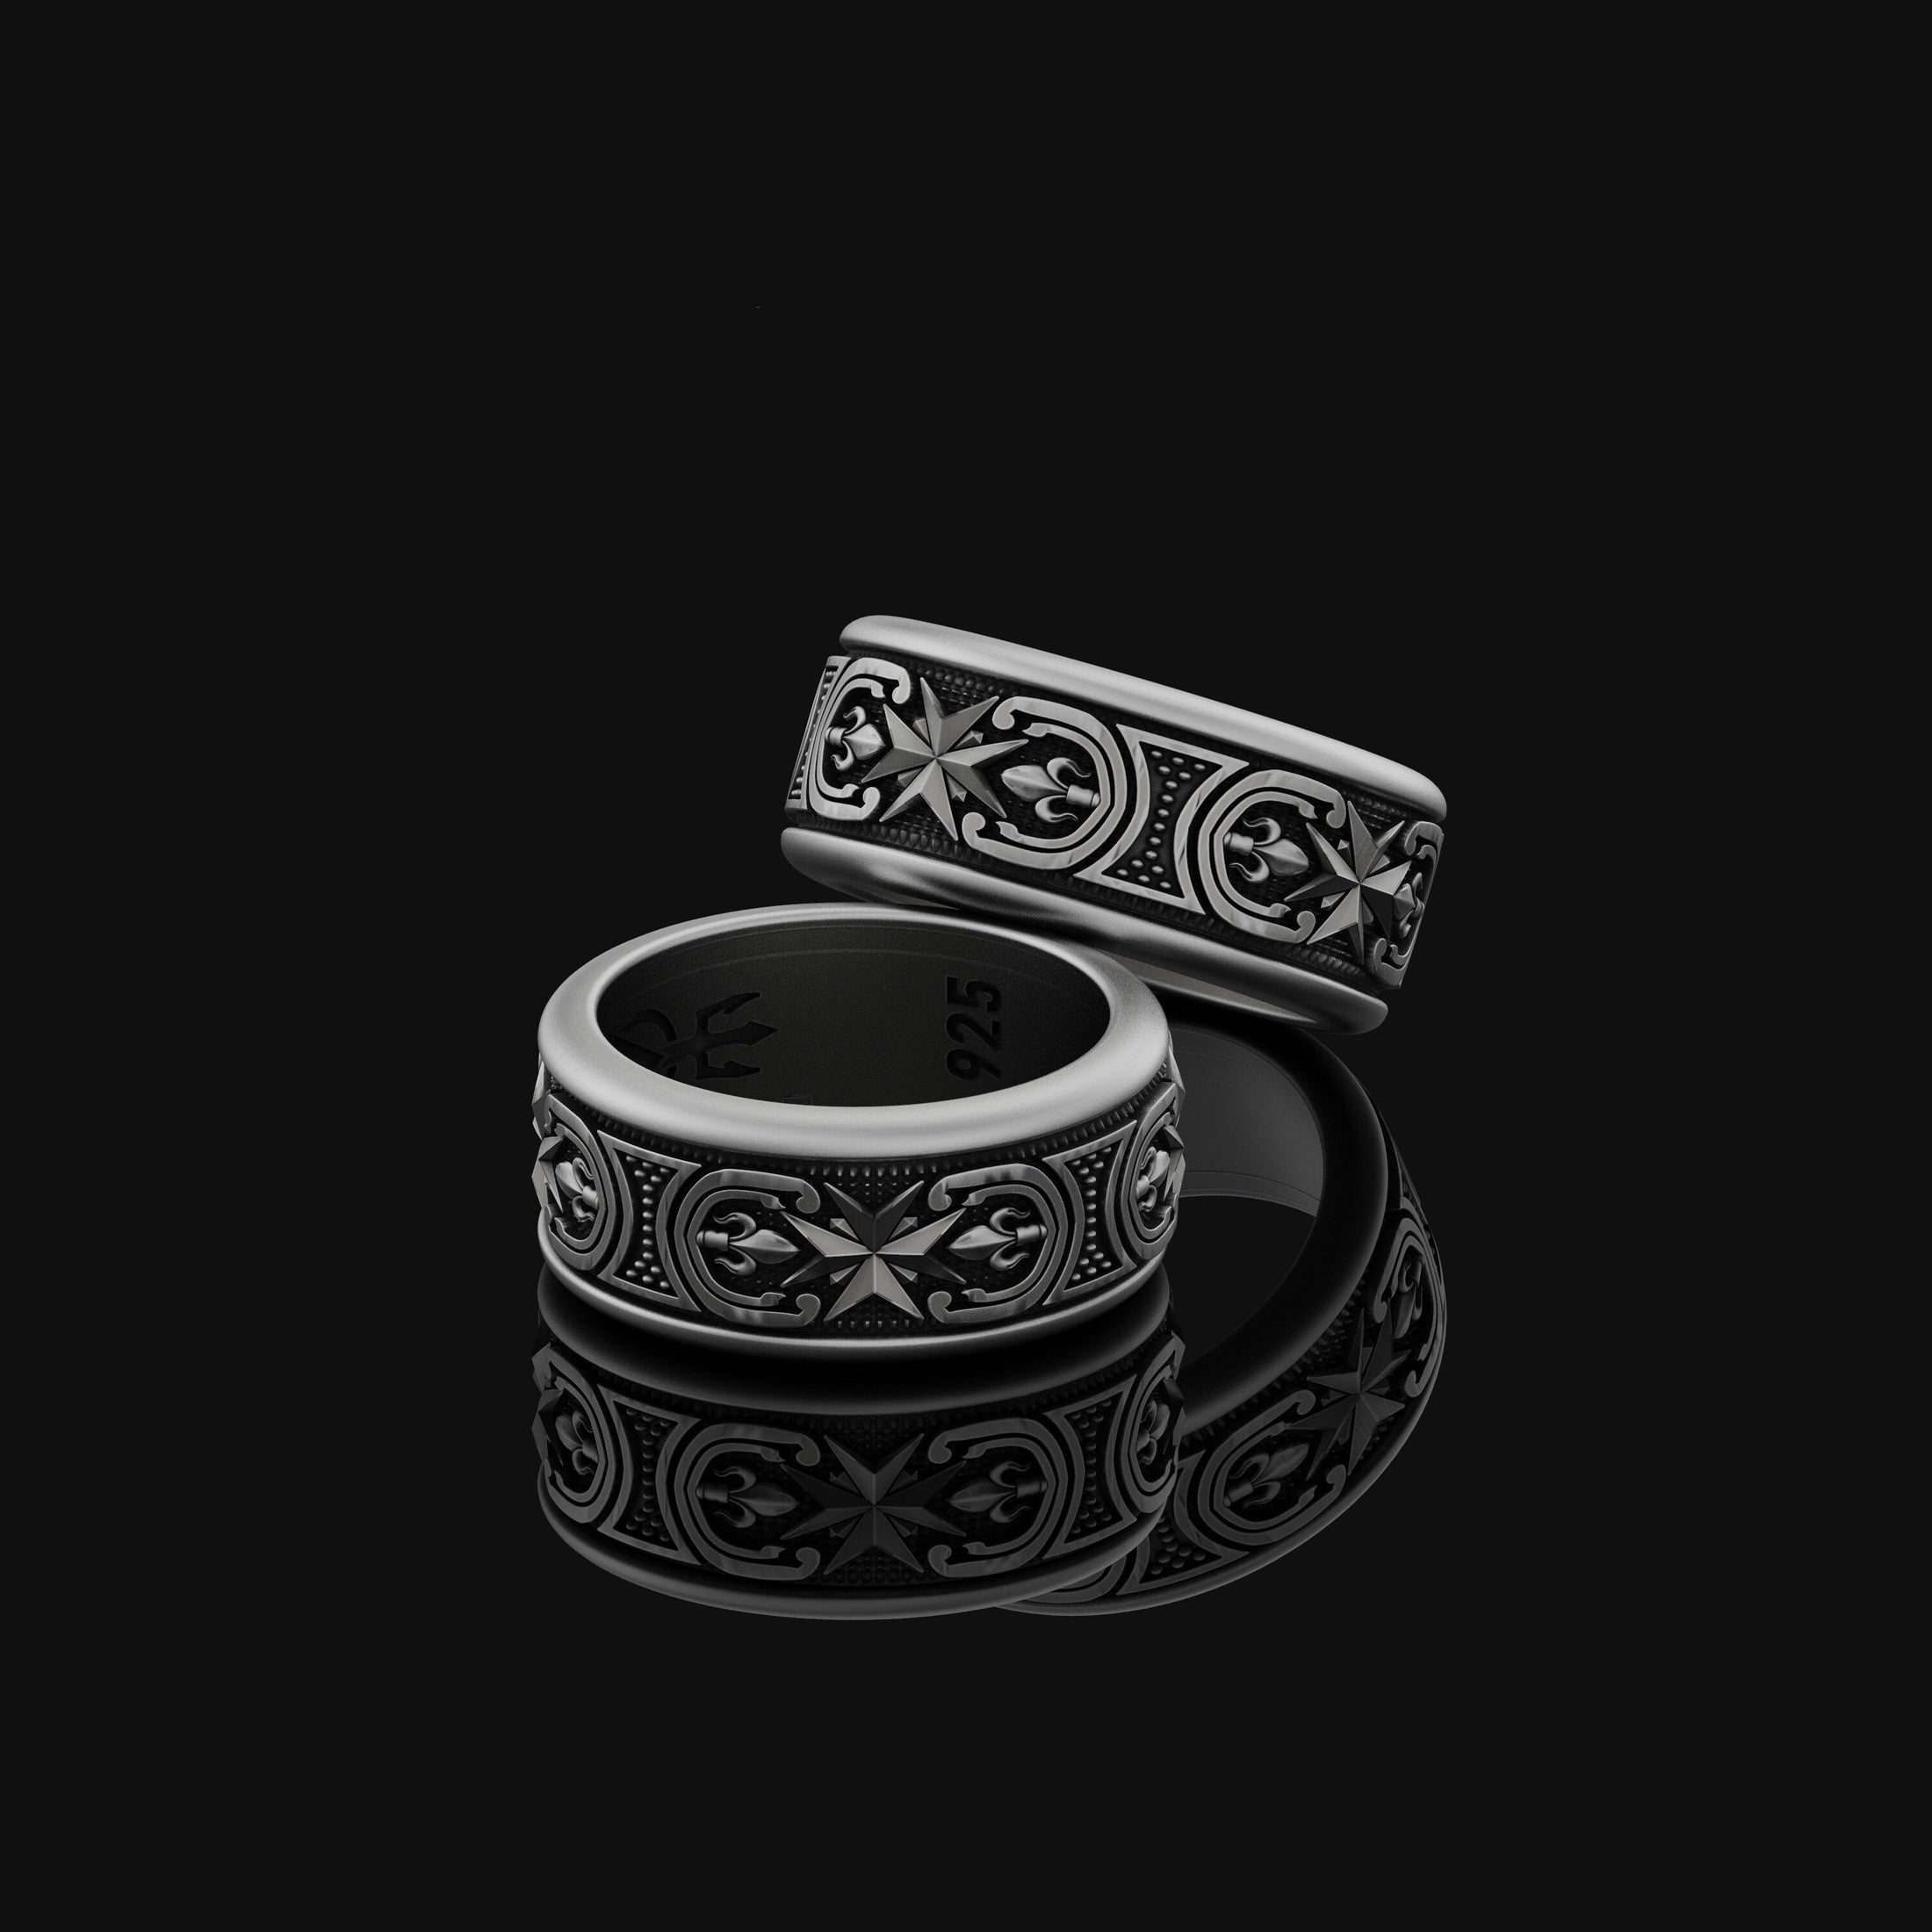 Spinning Maltese Cross Wedding Band Ring, Rotating Design, Engravable Inside, Symbol of Valor & Faith Oxidized Finish